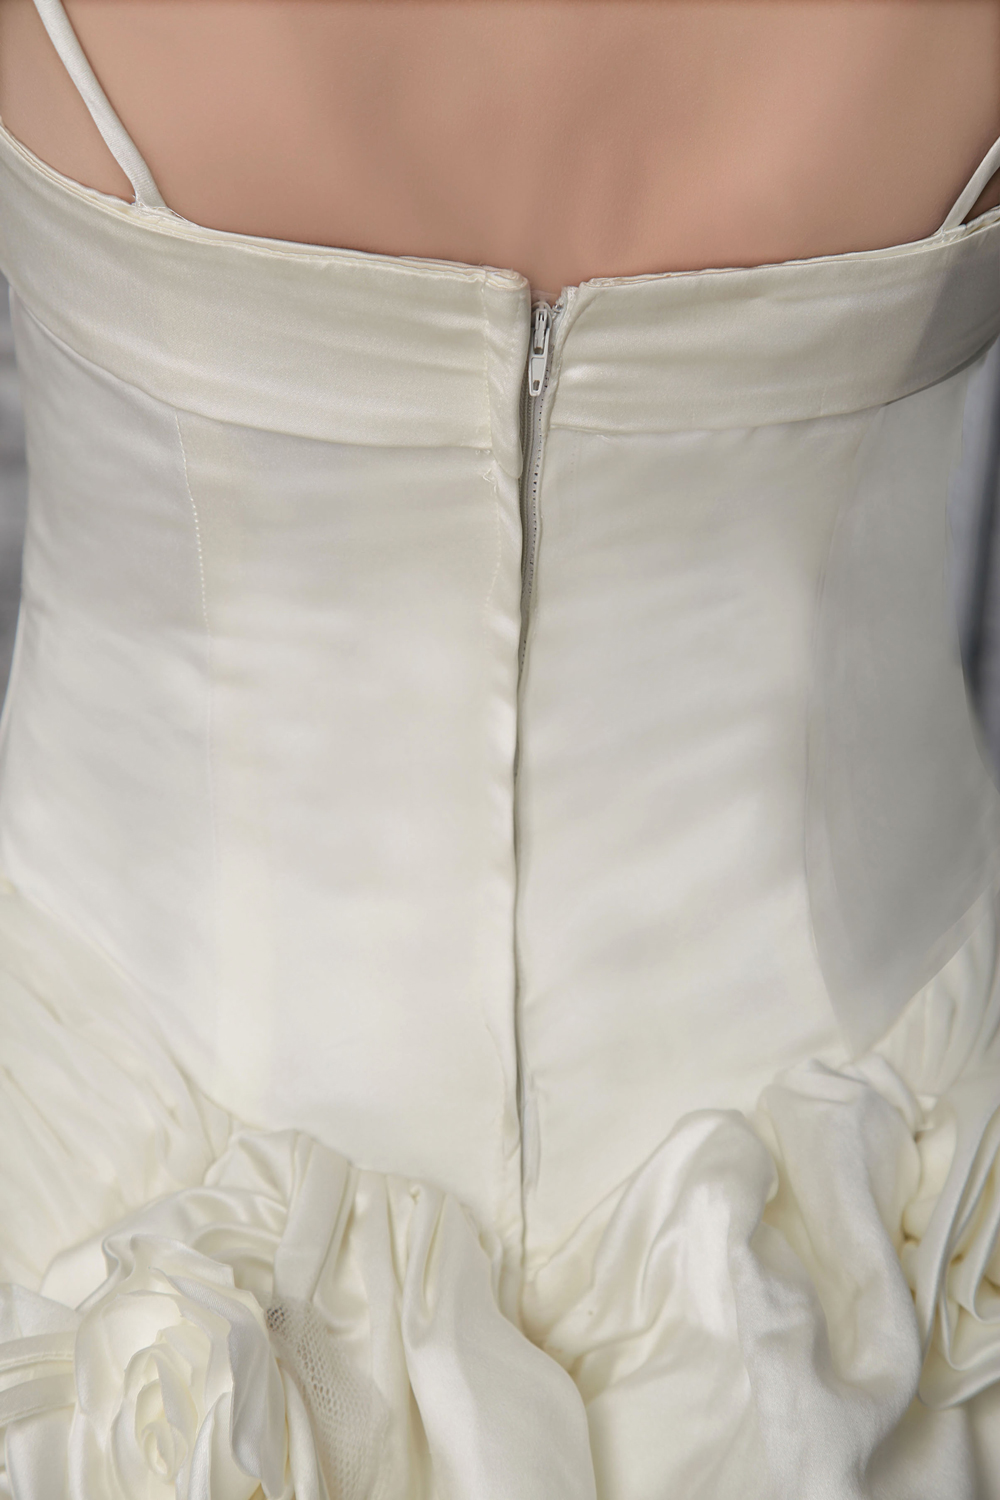 White A-Line/Princess Strap cathedral Train Taffeta Beading Wedding Dress